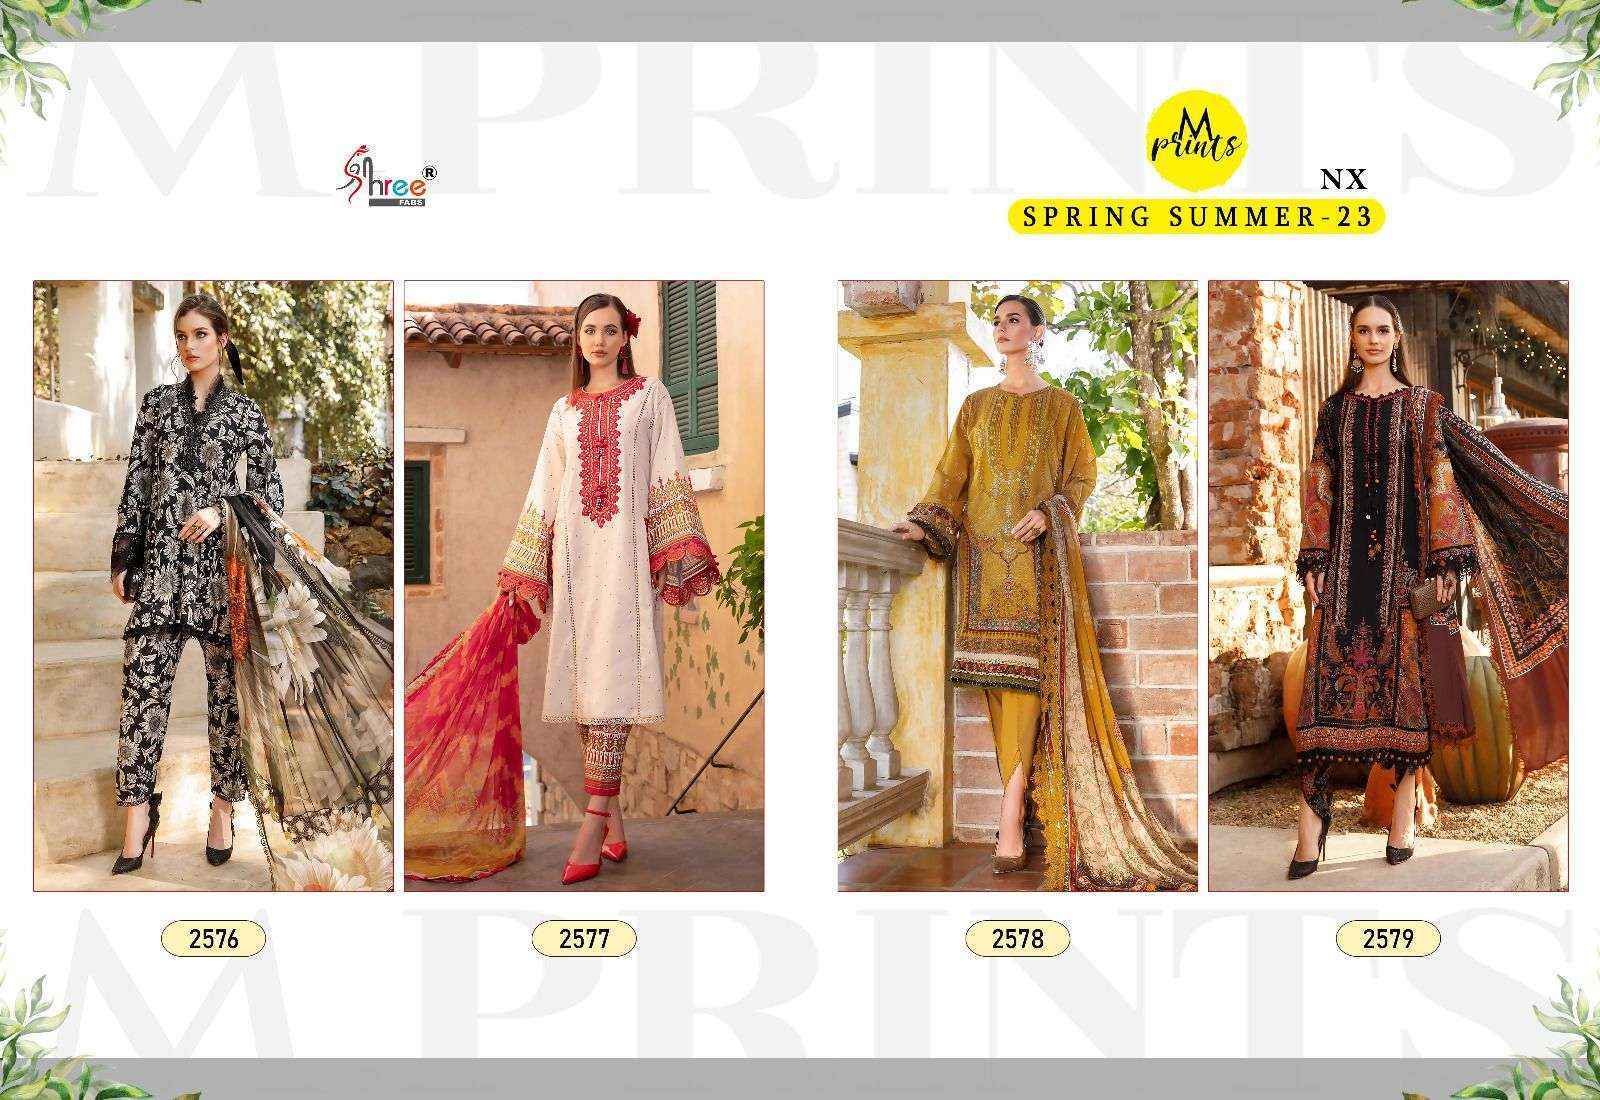 Shree Fabs M Print Spring Summer 23 Vol 1 Nx Cotton Dress Material 4 pcs Catalogue